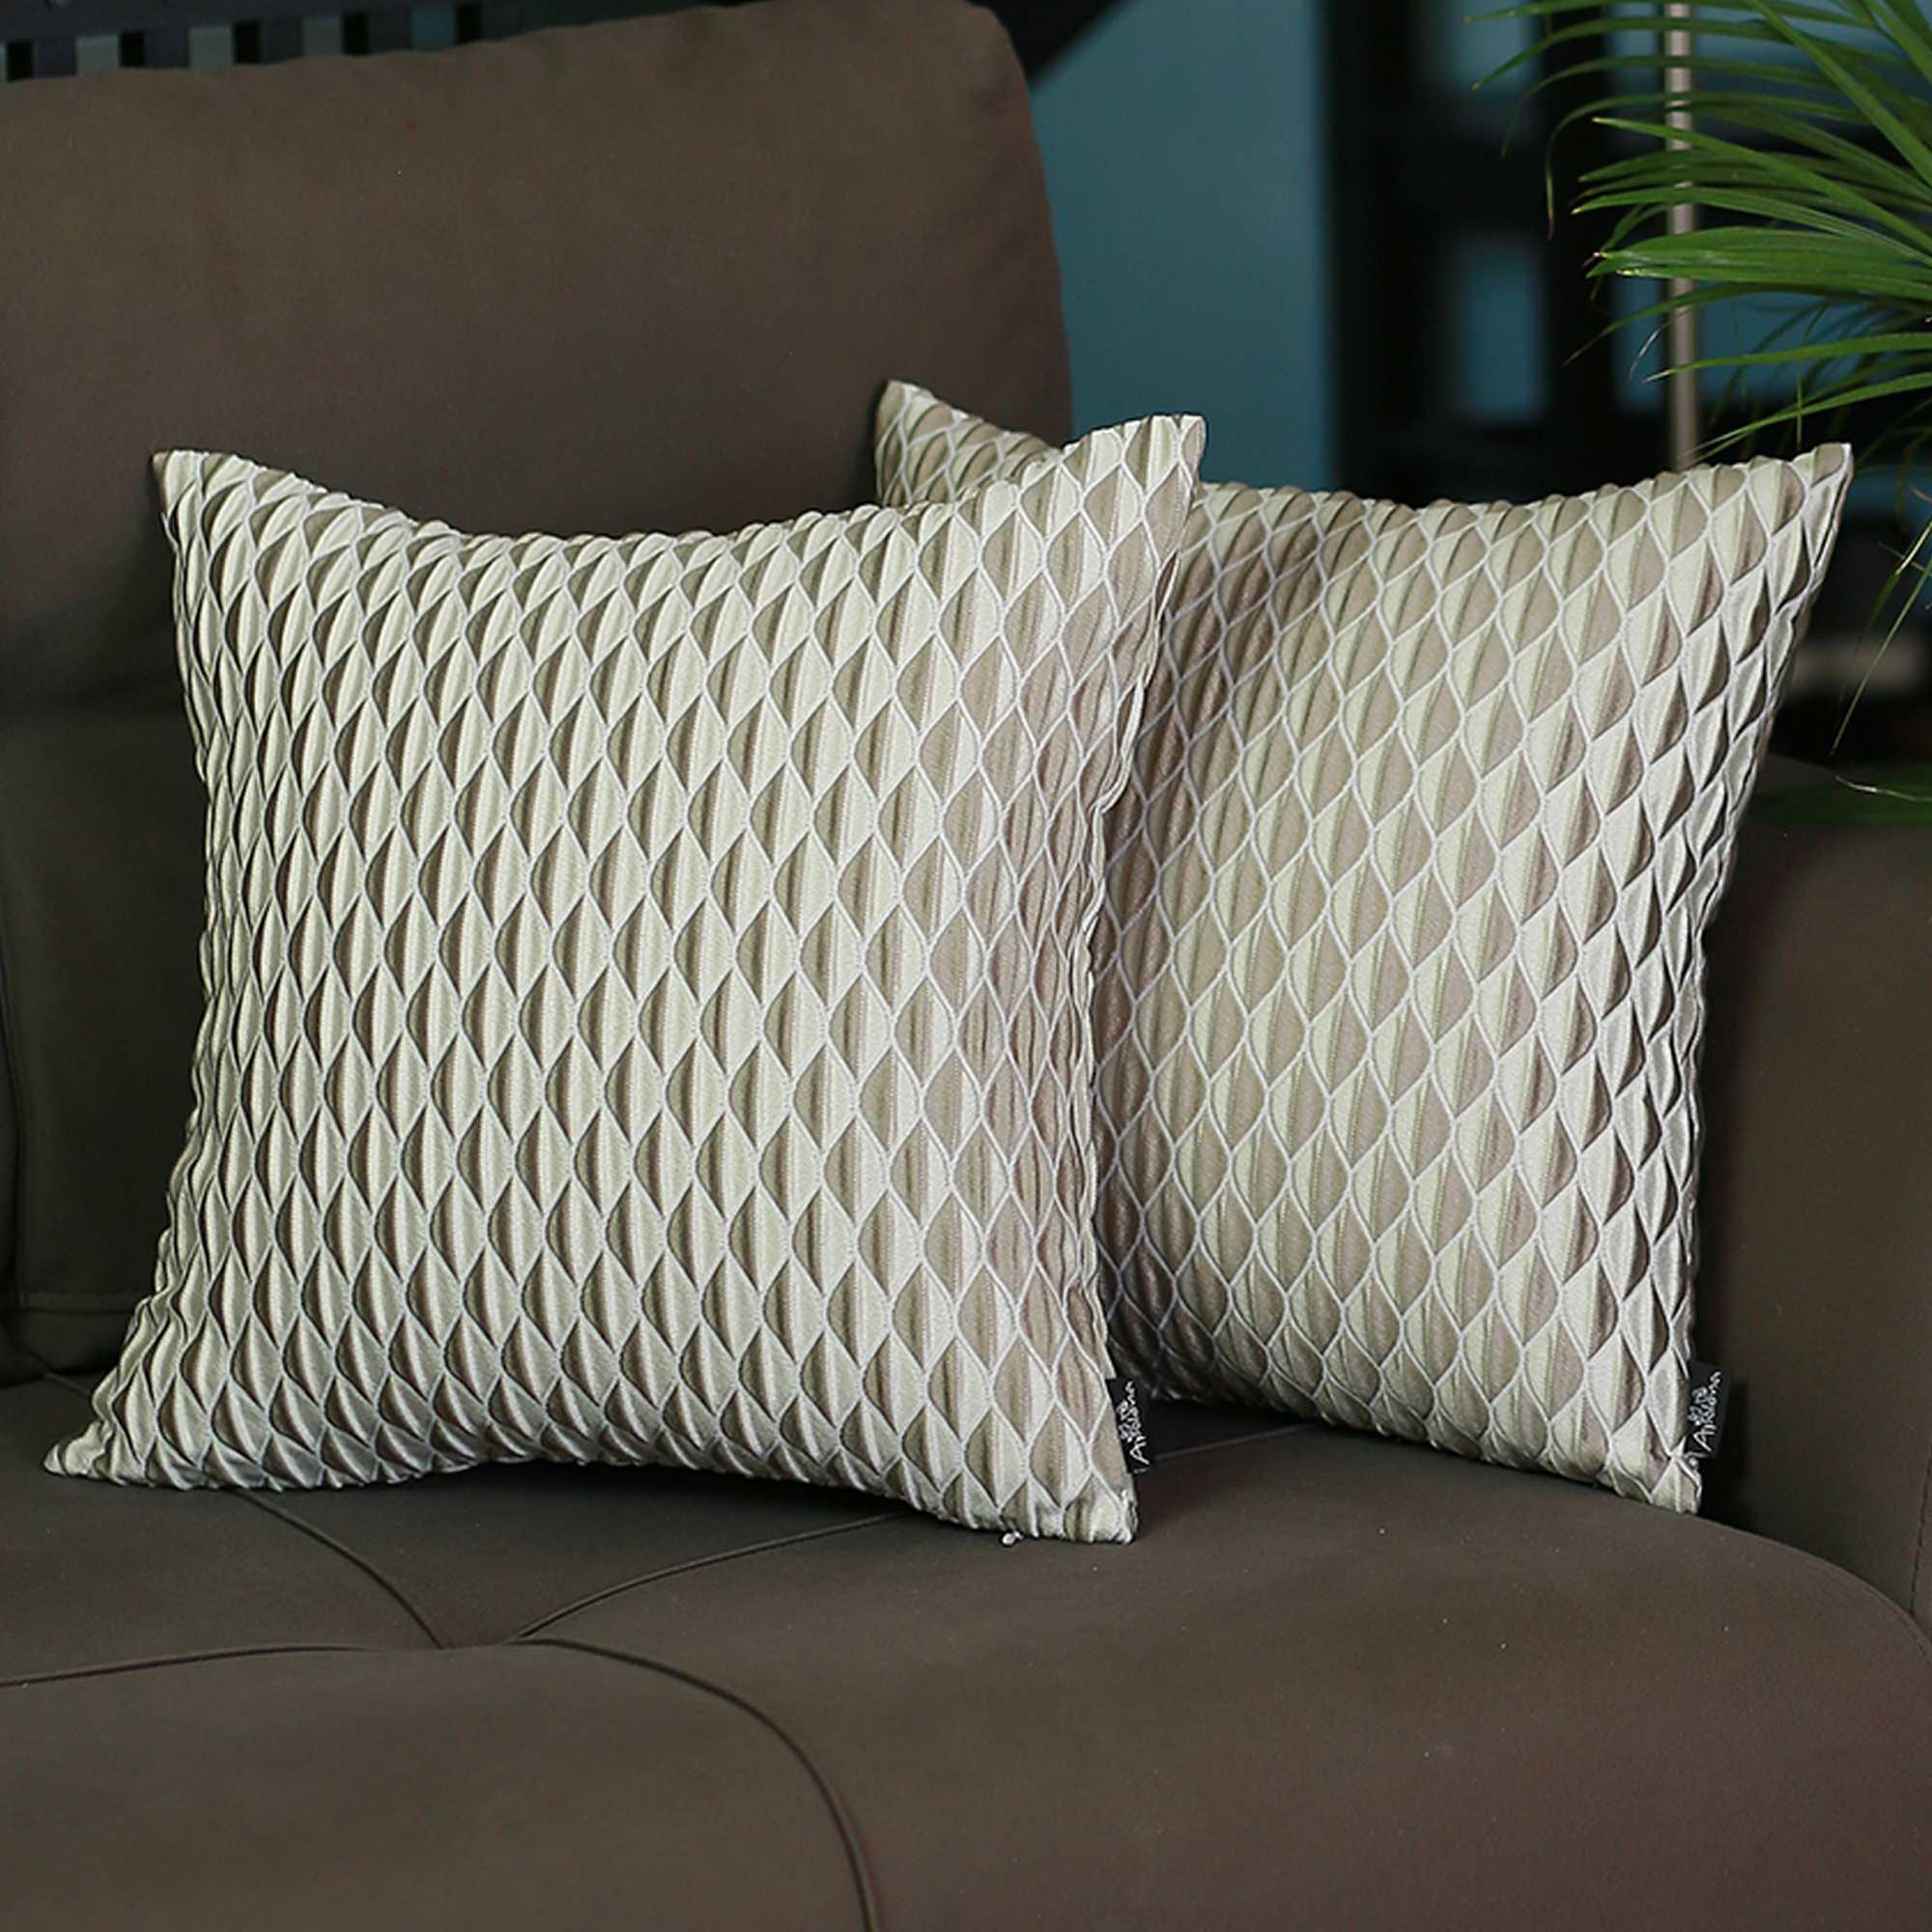 17"x 17" Honeycomb Jacquard Decorative Throw Pillow Cover Set Of 2 Pcs Square